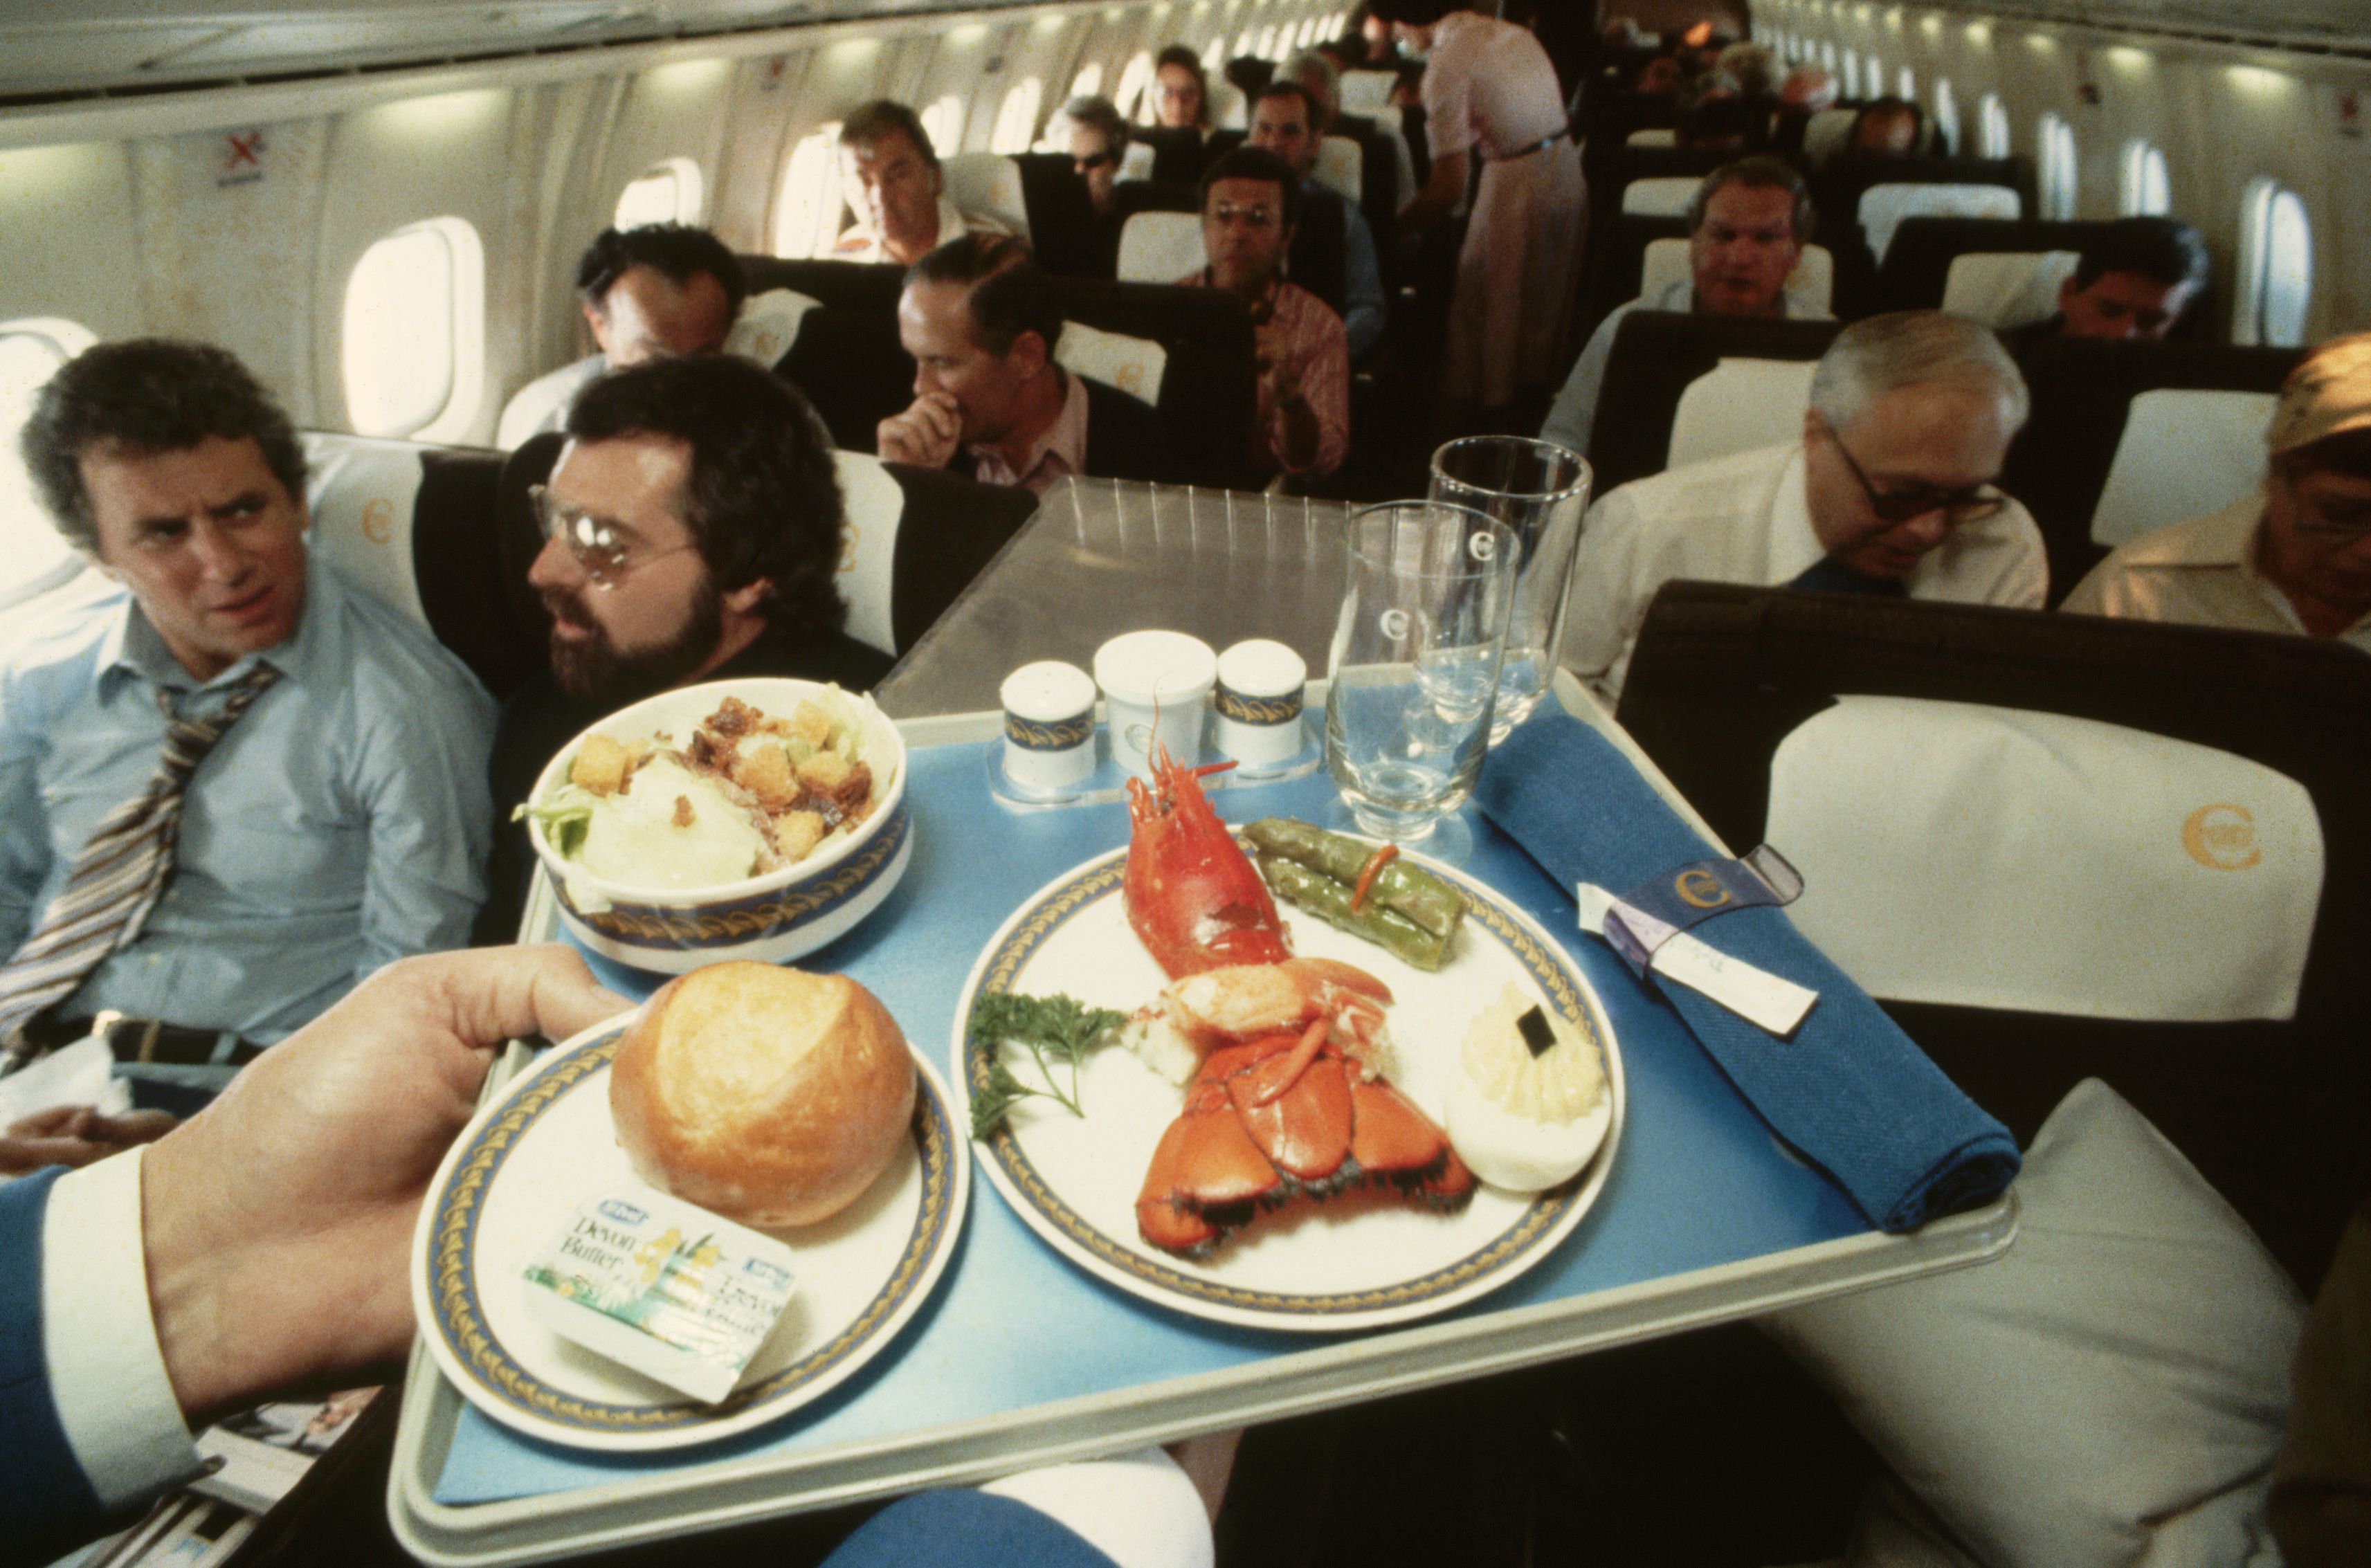 Concorde food meal service